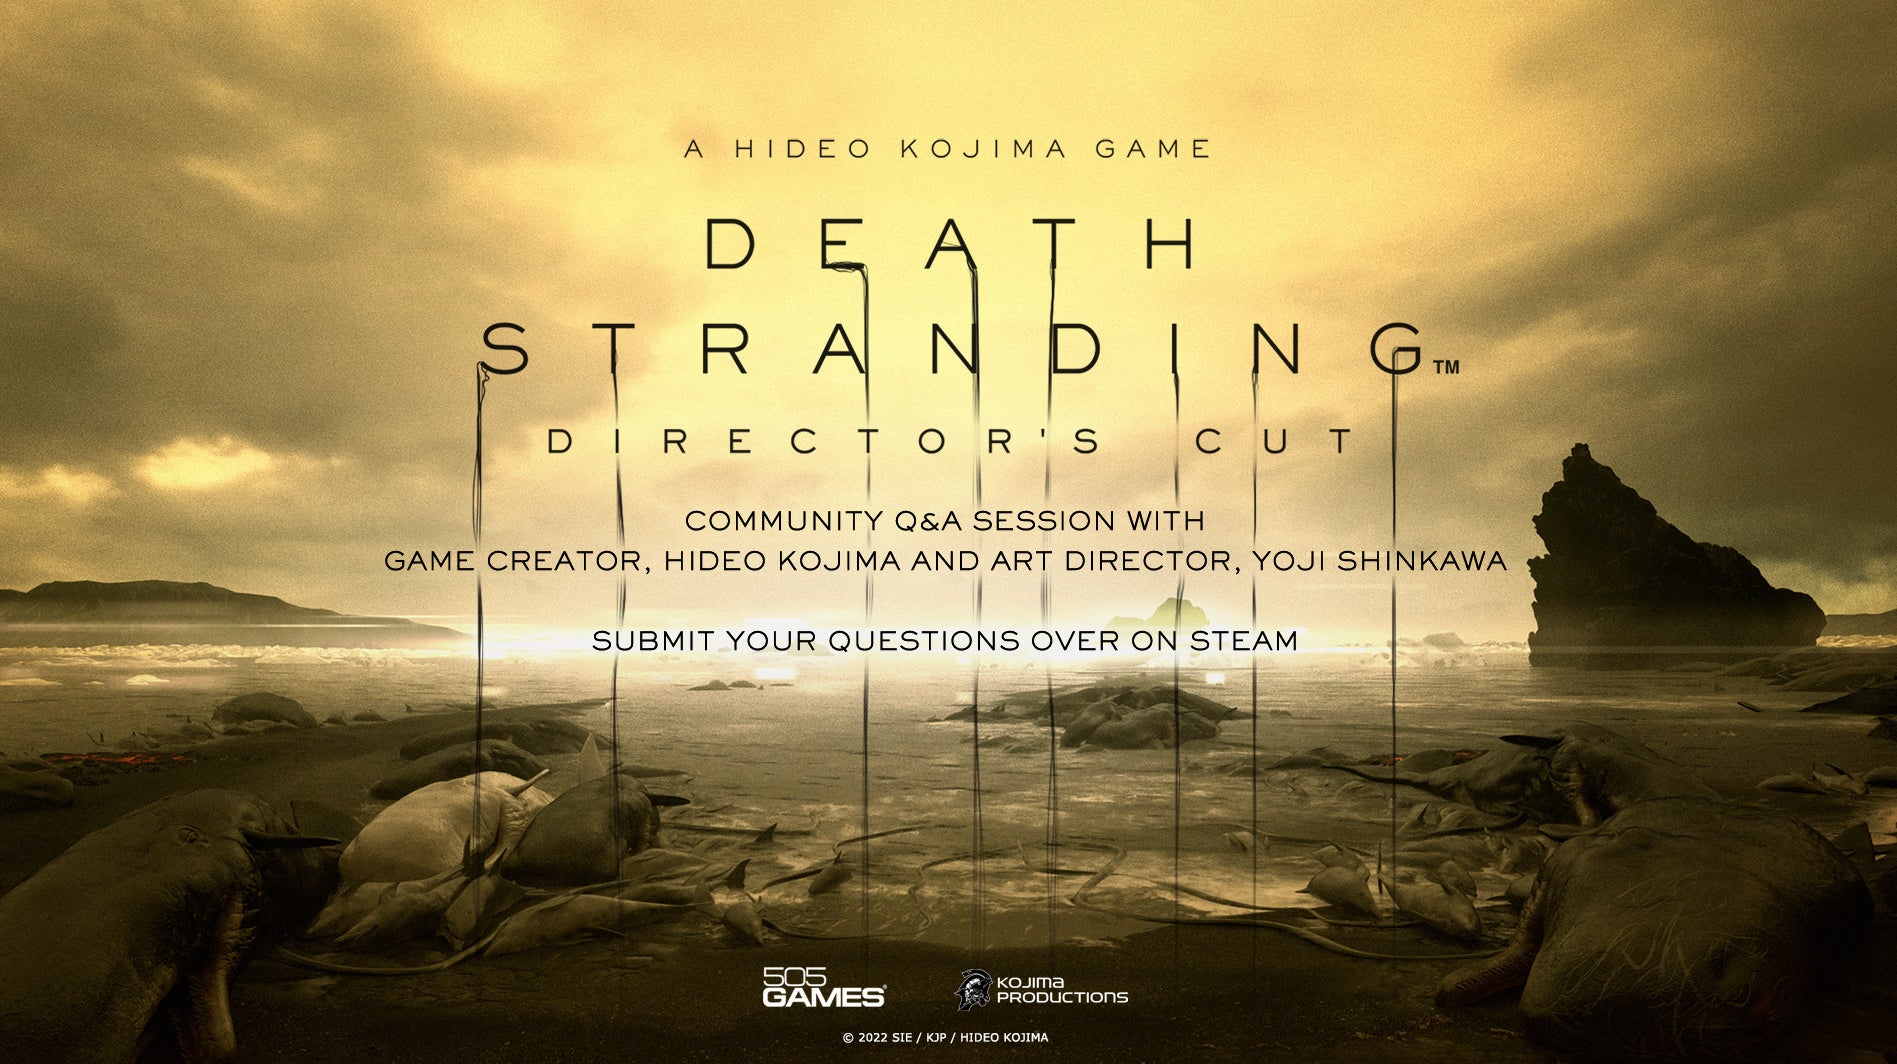 Immagine di Death Stranding Director's Cut: Hideo Kojima e Yoji Shinkawa a disposizione dei fan in una sezione Q&A